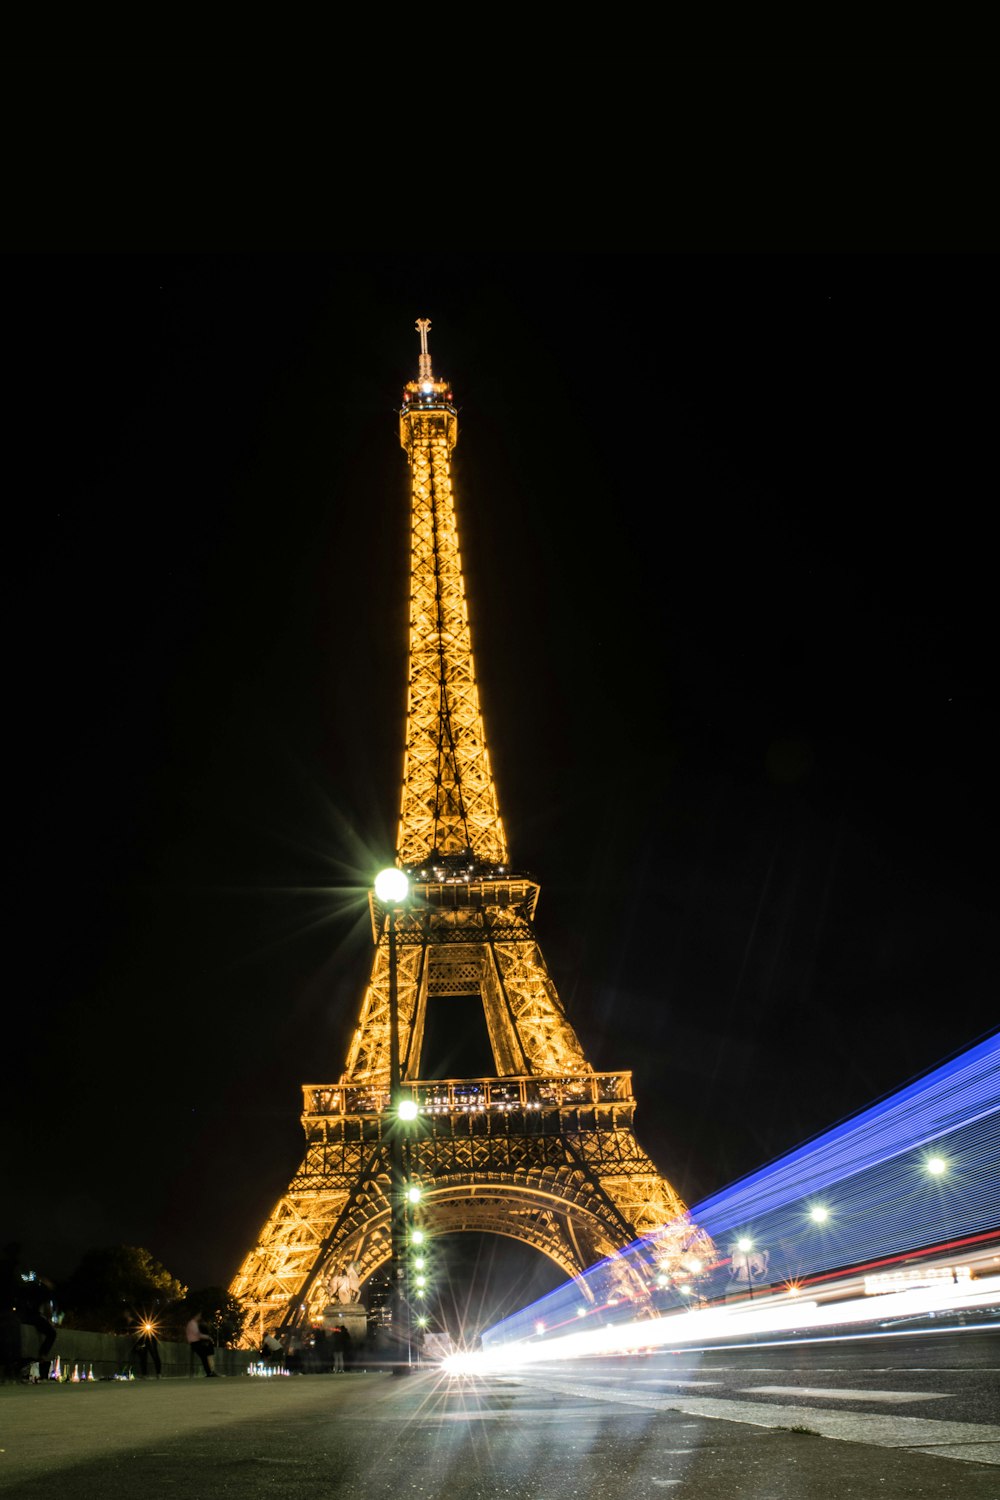 Eiffel tower with lights night time photo – Free Paris Image on Unsplash